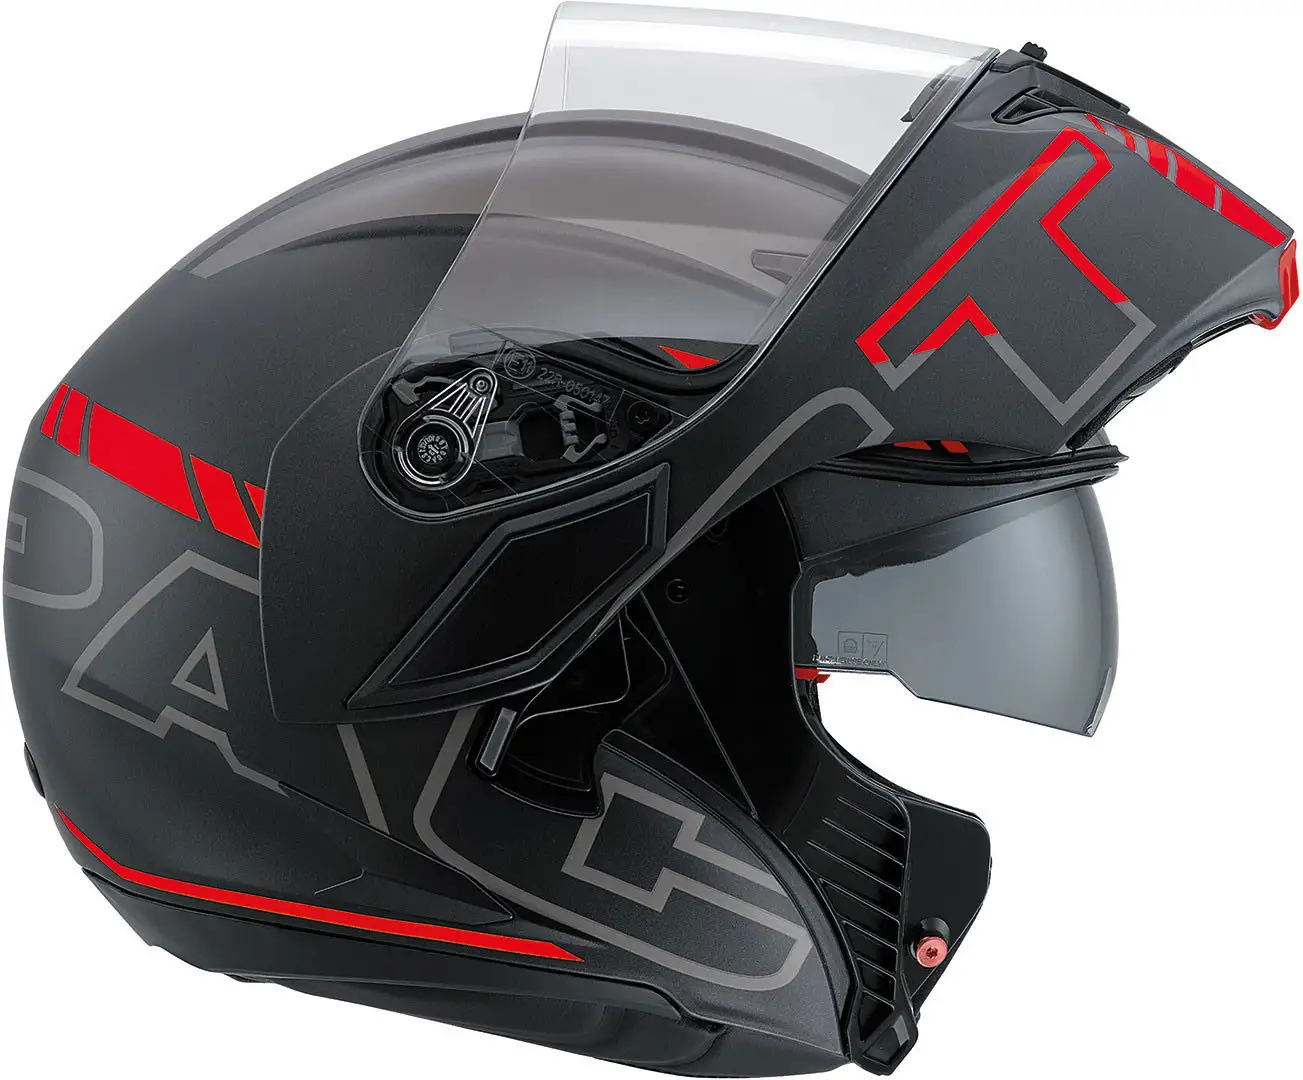 Agv Compact ST Multi Seattle matt black silver red Pinlock modular helmet